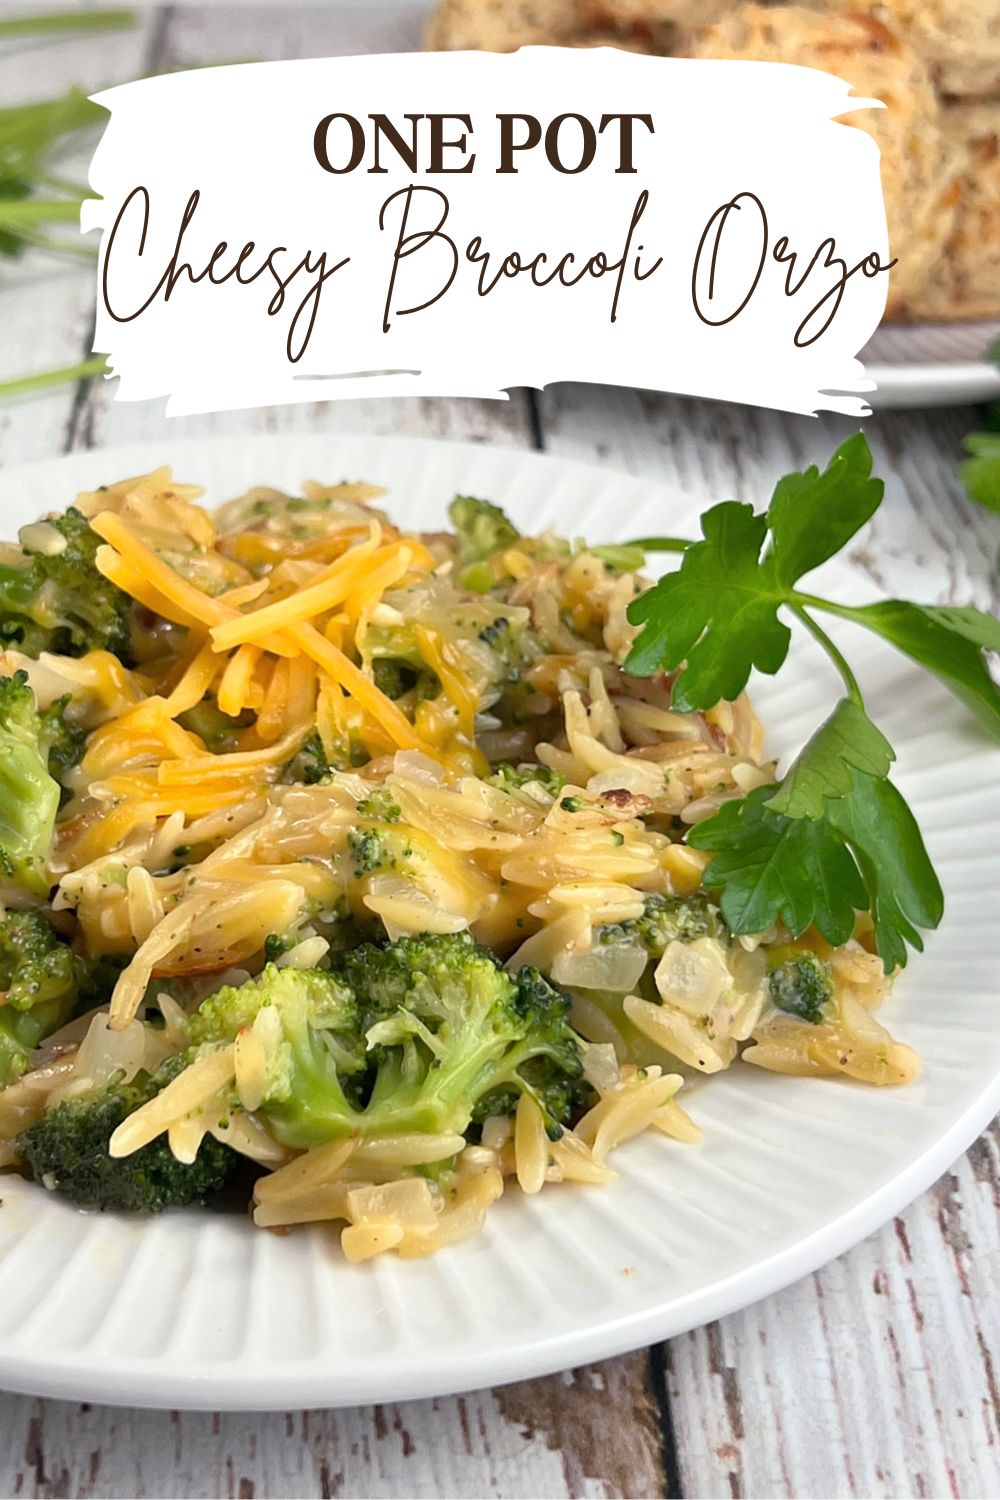 One Pot Cheesy Broccoli Orzo via @preventionrd